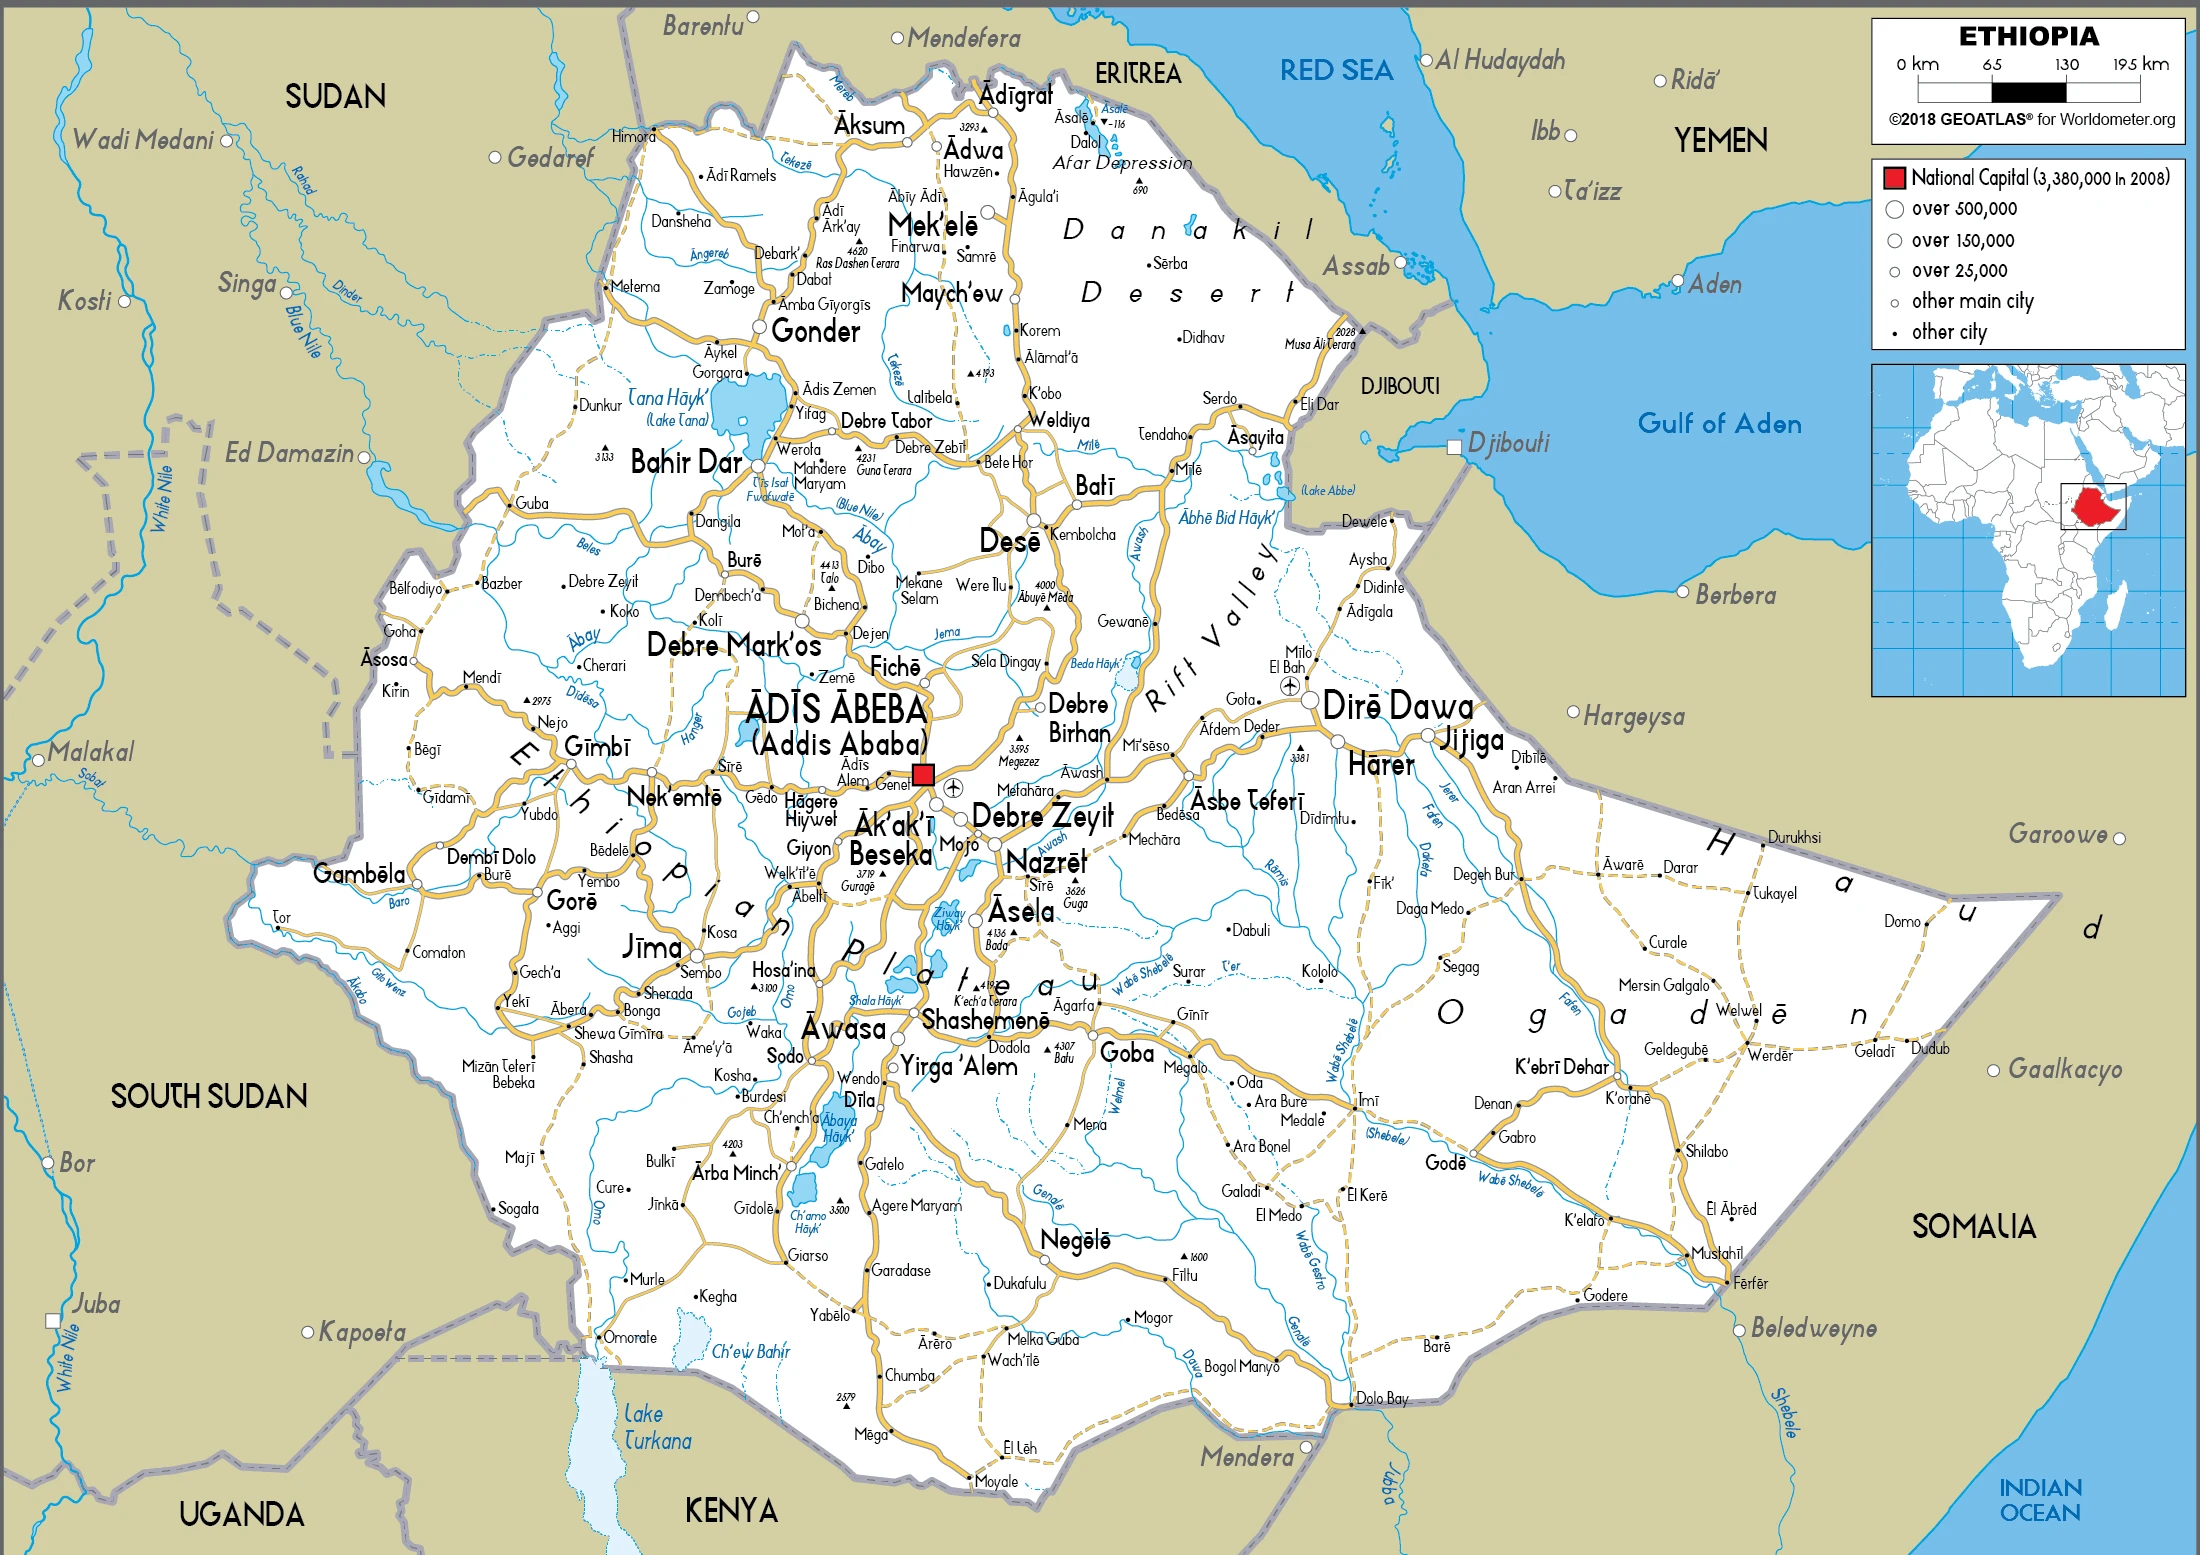 The route plan of the Ethiopian roadways.